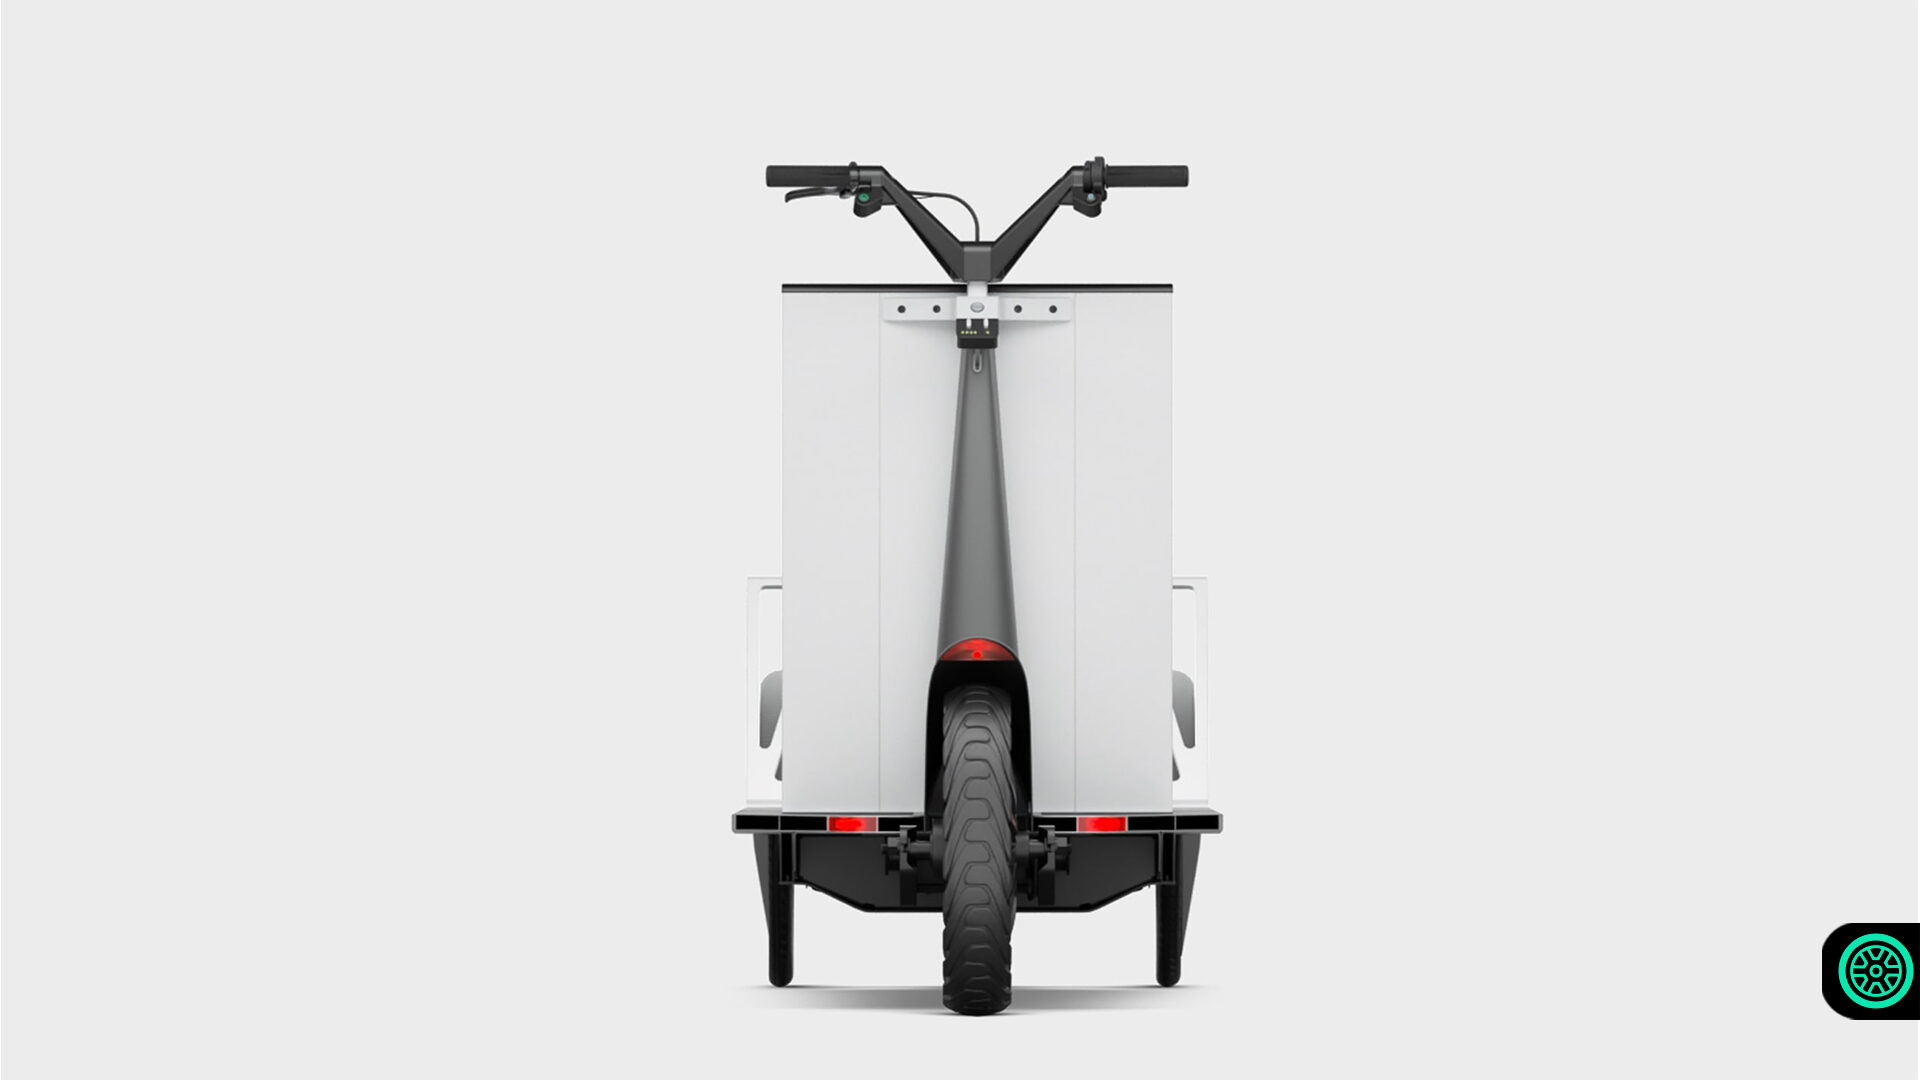 Polestar Re:Move teslimat scooter konsepti tanıtıldı! 4